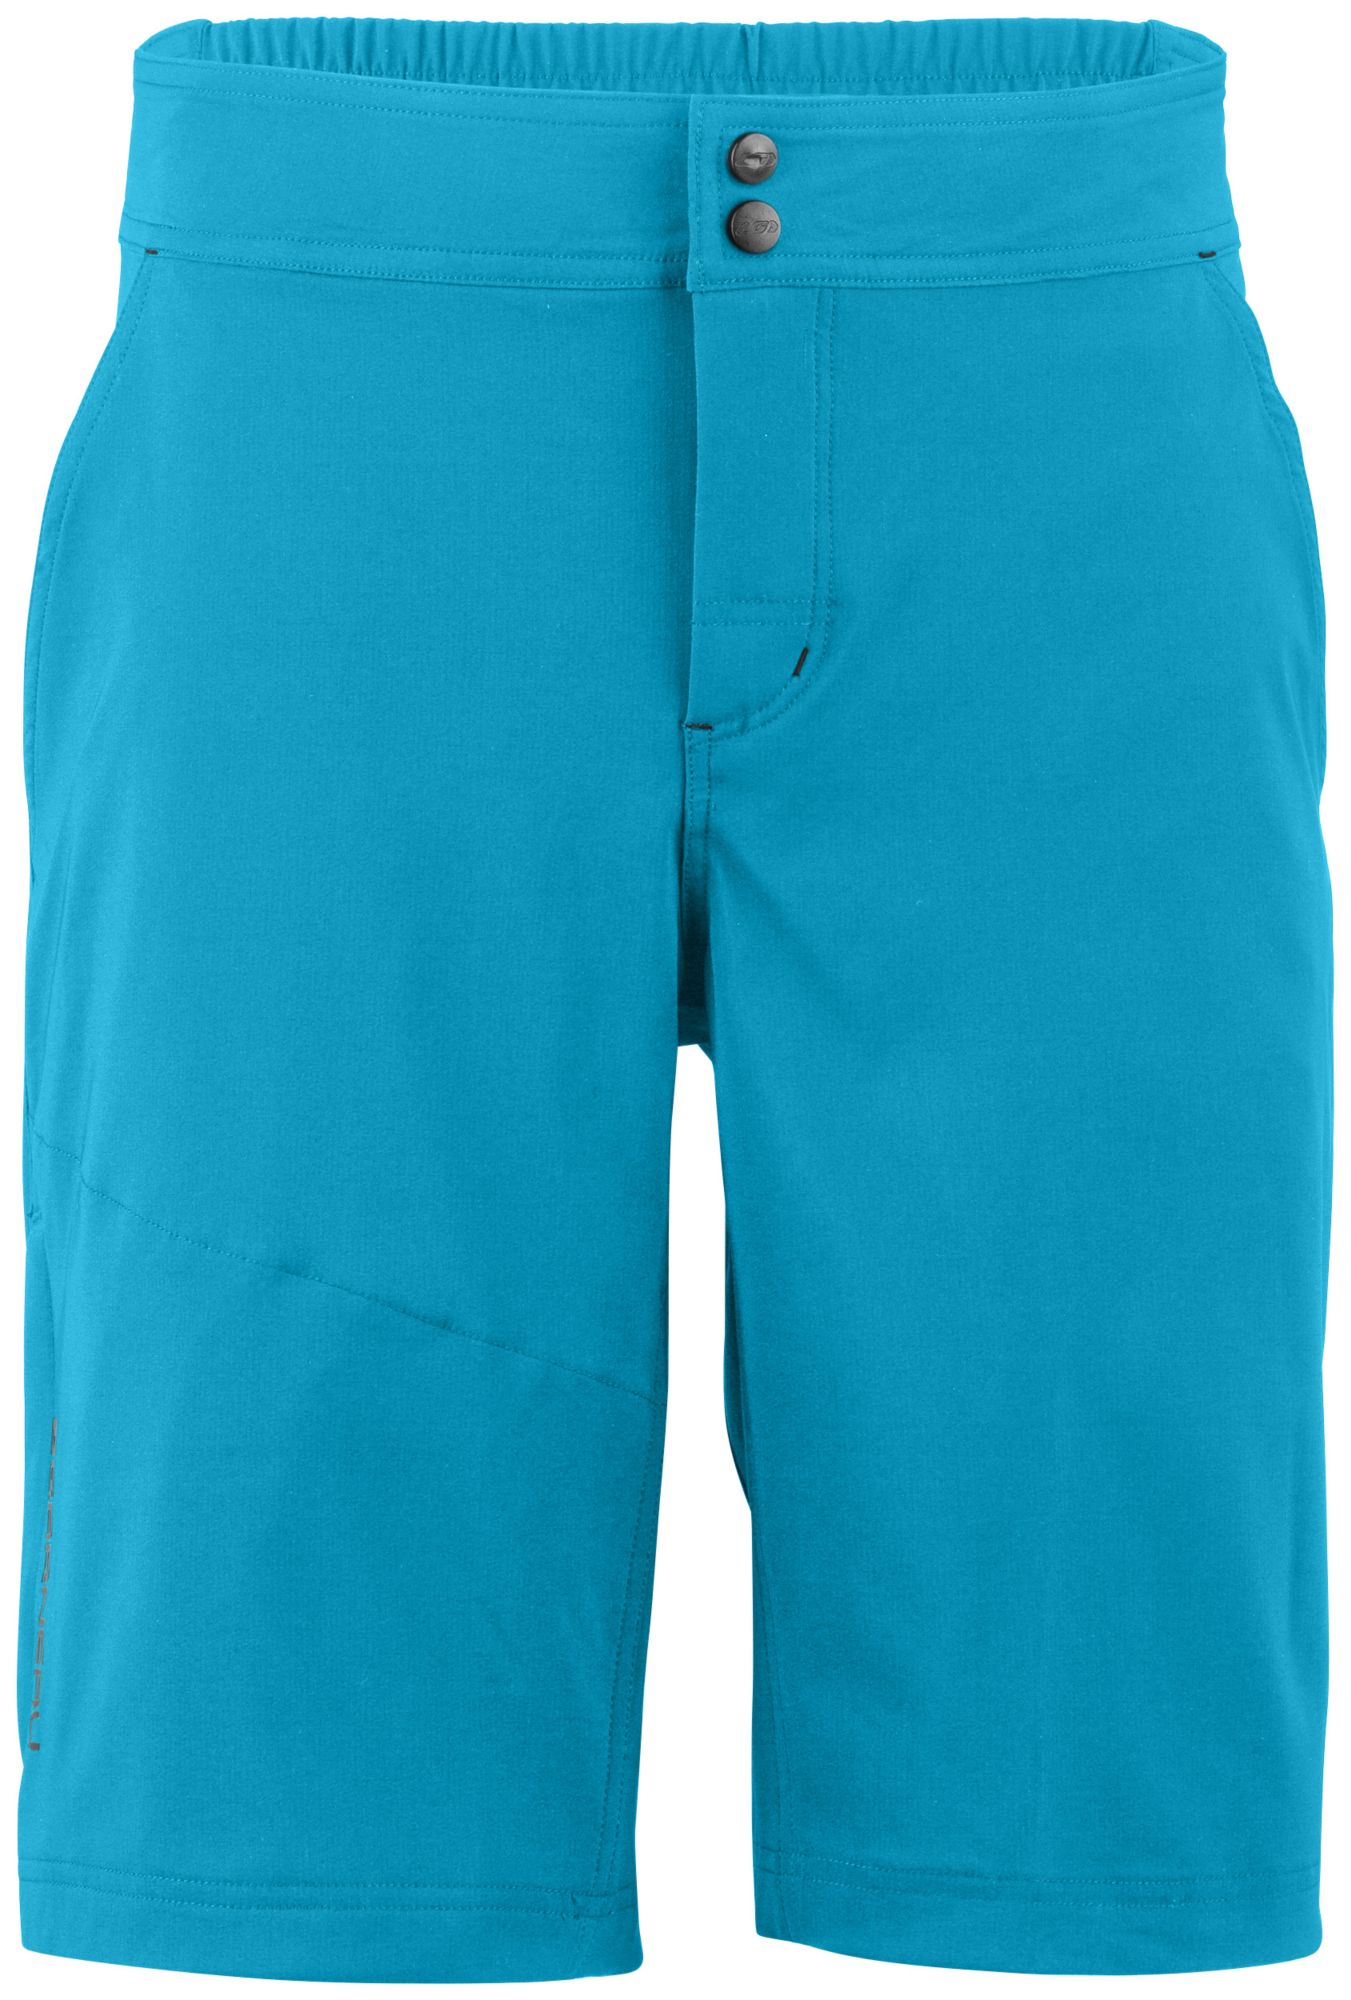 garneau shorts